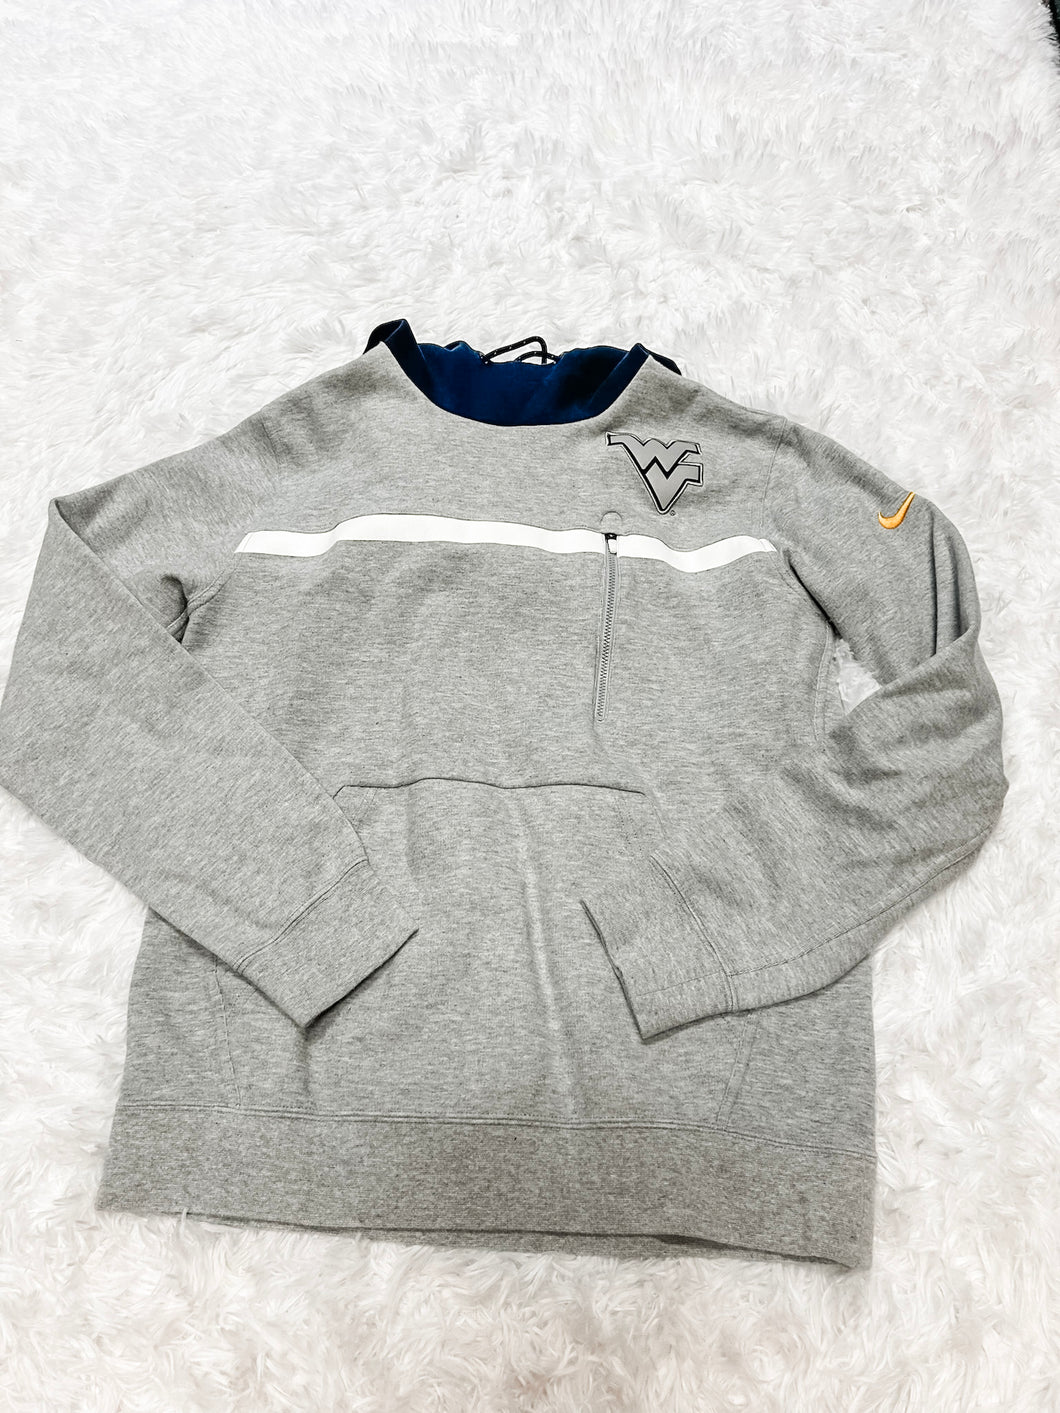 Nike Sweatshirt Size Medium M0378